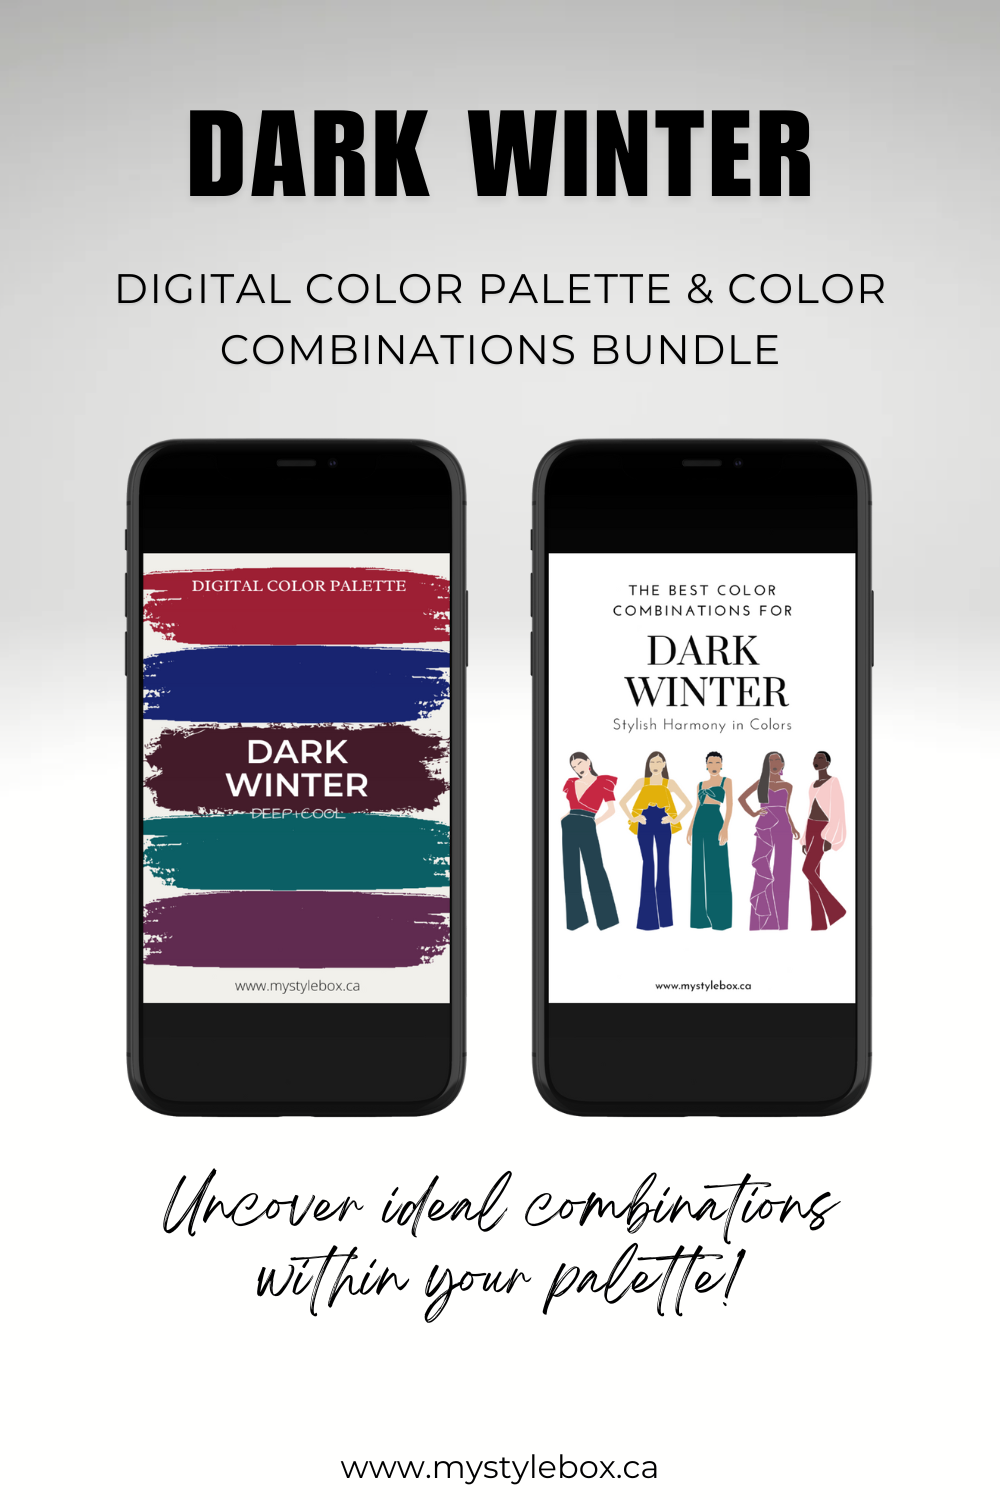 Dark (Deep) Winter Digital Color Palette and Color Combinations